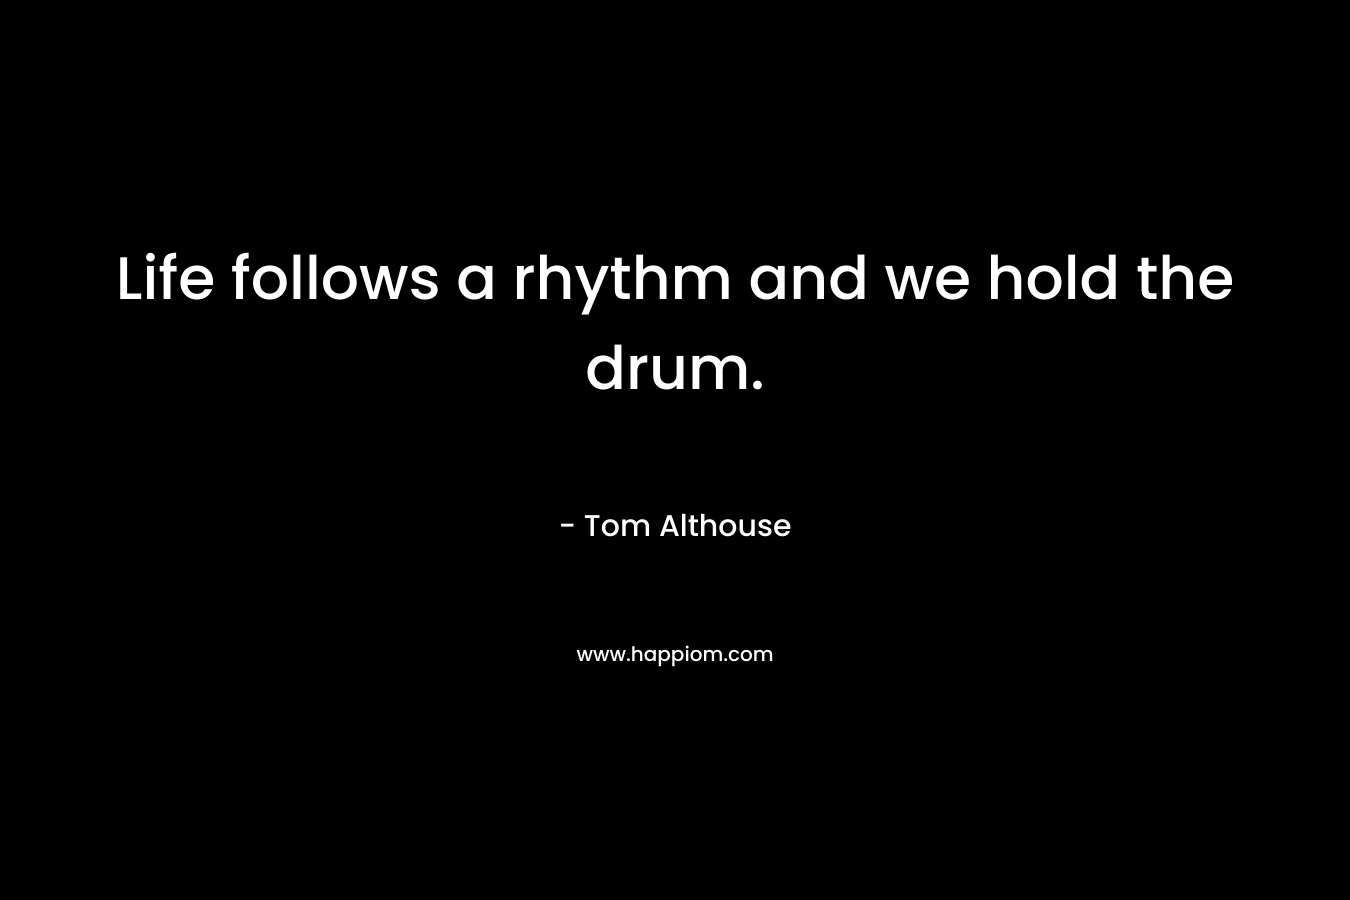 Life follows a rhythm and we hold the drum.